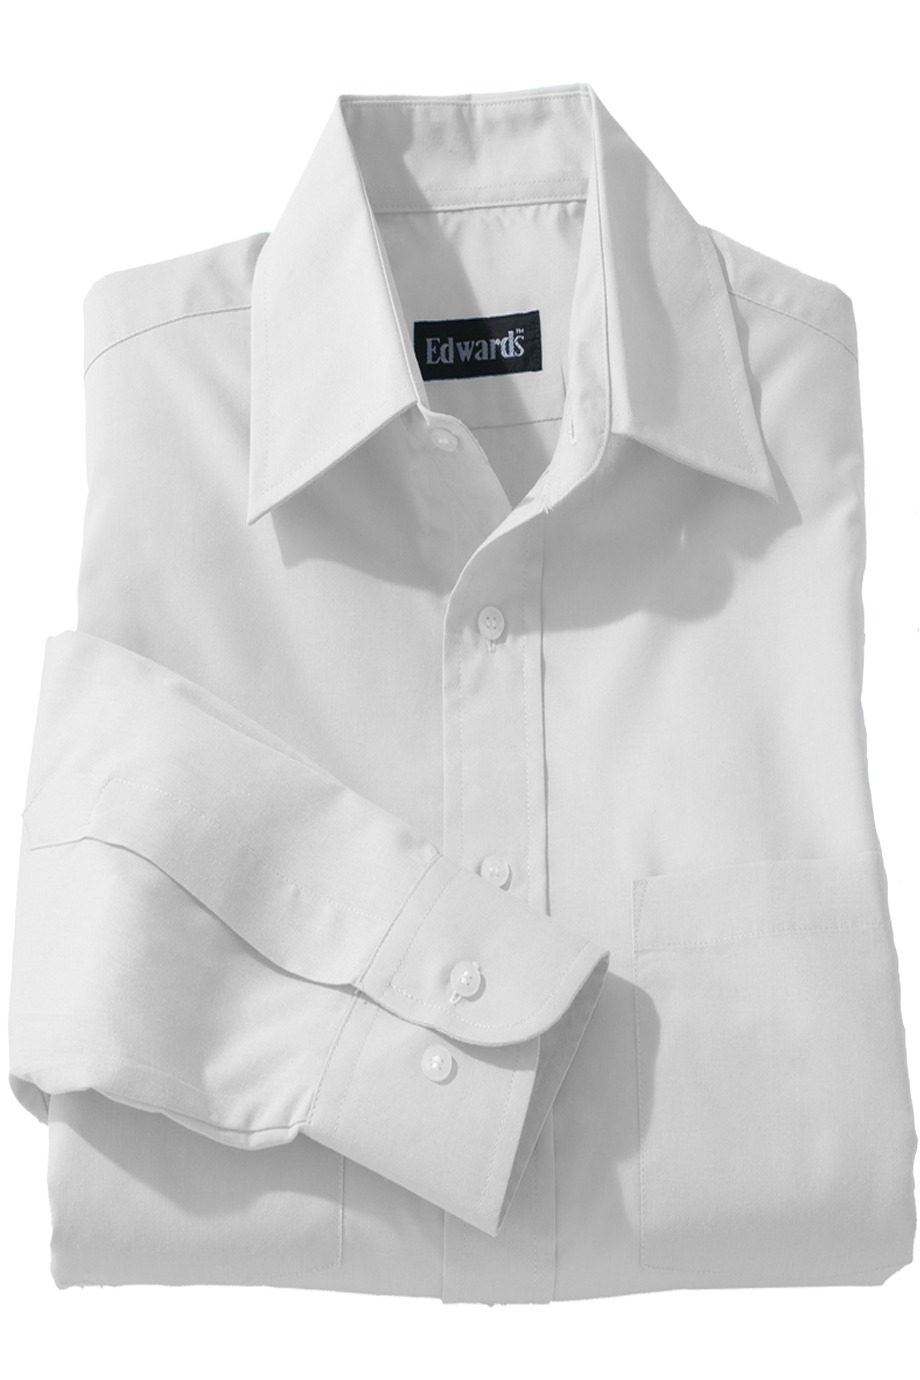 Edwards Garment 1160 - Men's Traditional Long Sleeve Broadcloth Shirt